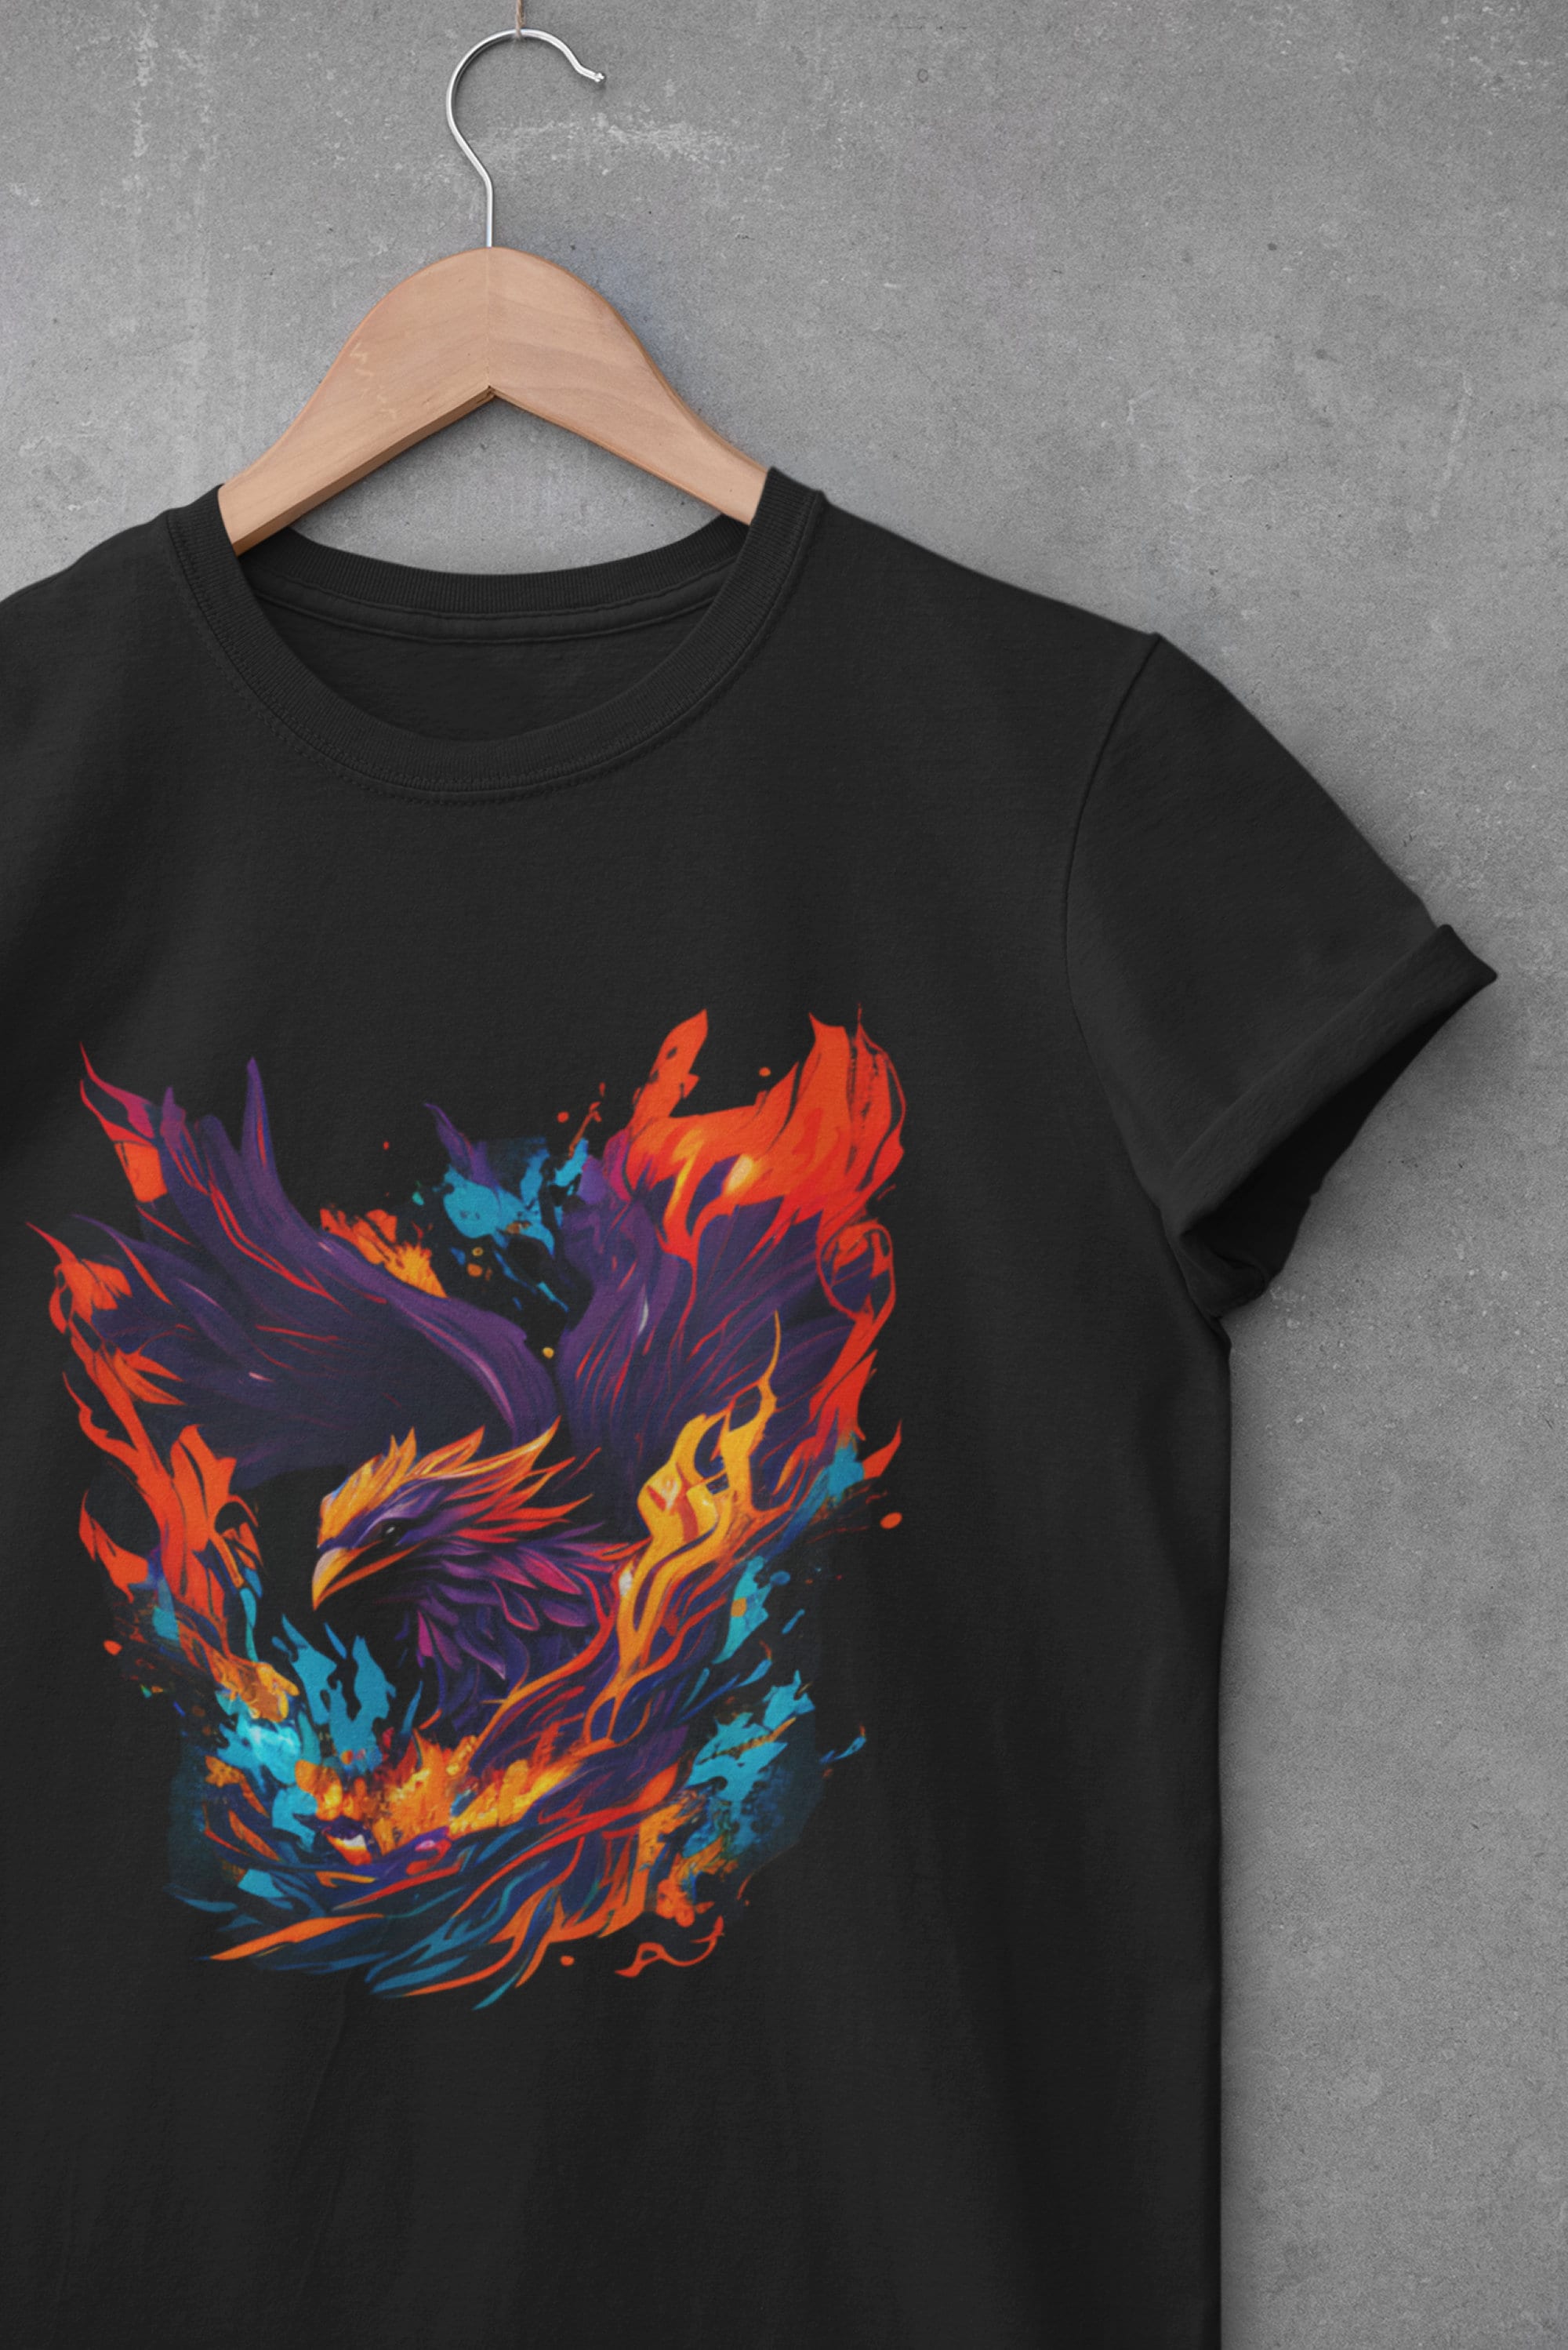 Phoenix T-shirt design